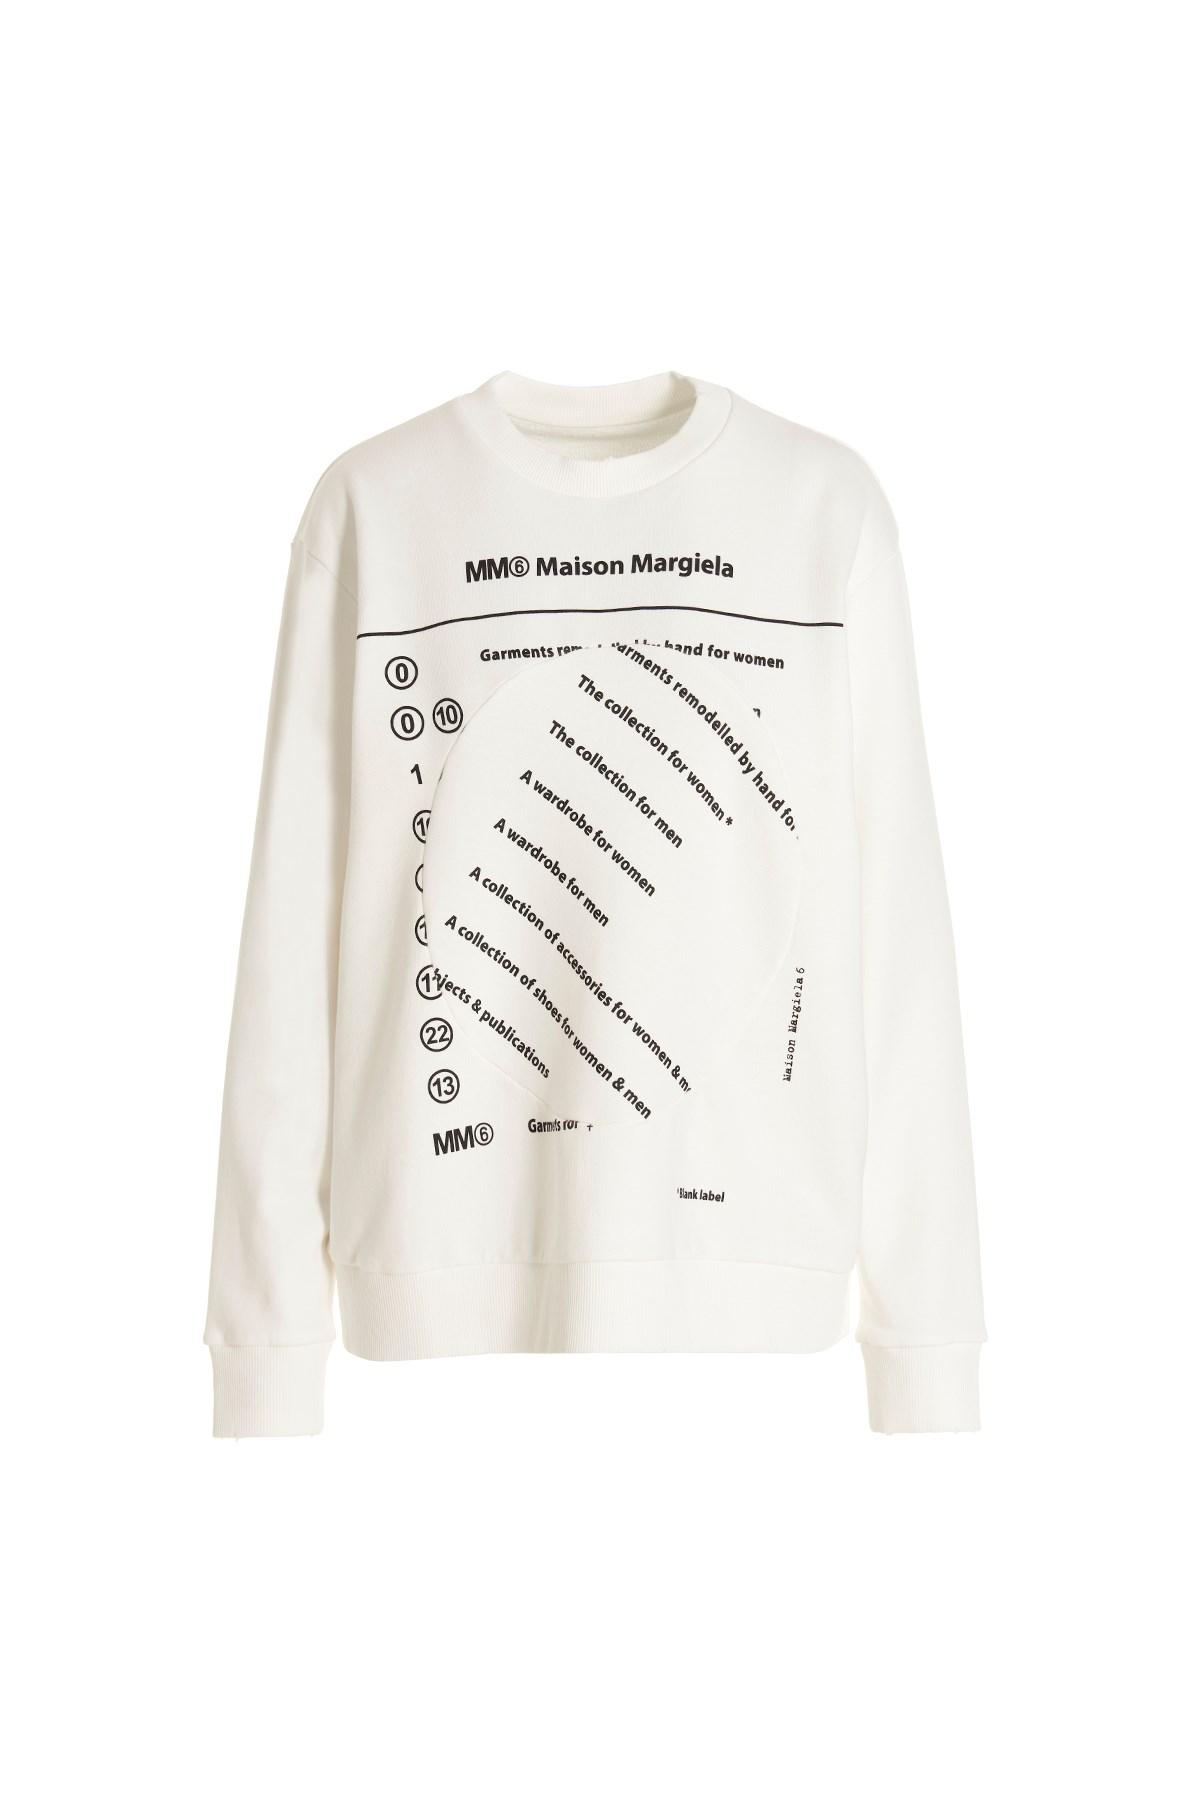 MM6 by Maison Martin Margiela Printed Sweatshirt in White | Lyst UK